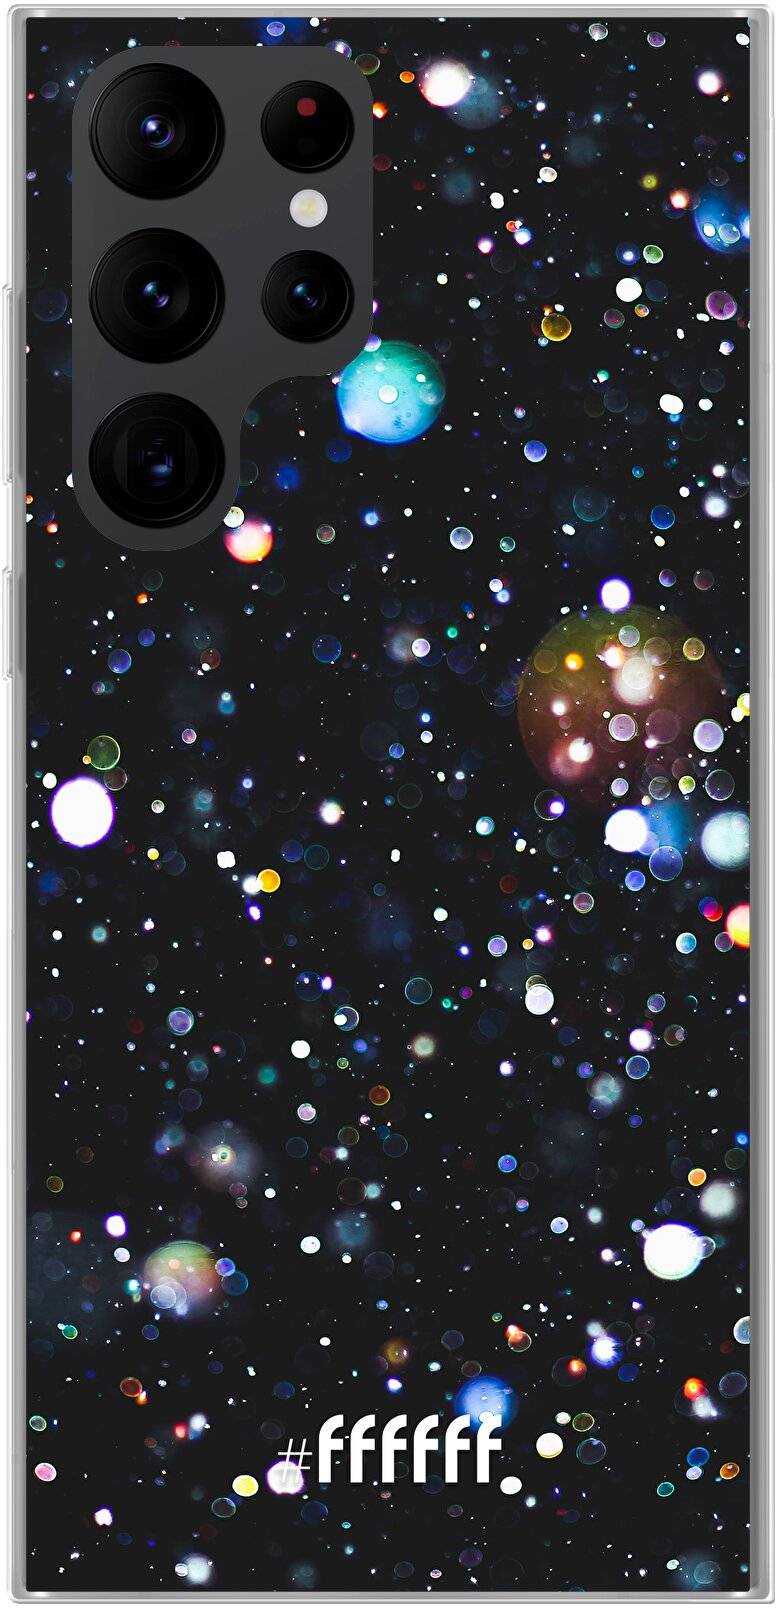 Galactic Bokeh Galaxy S22 Ultra